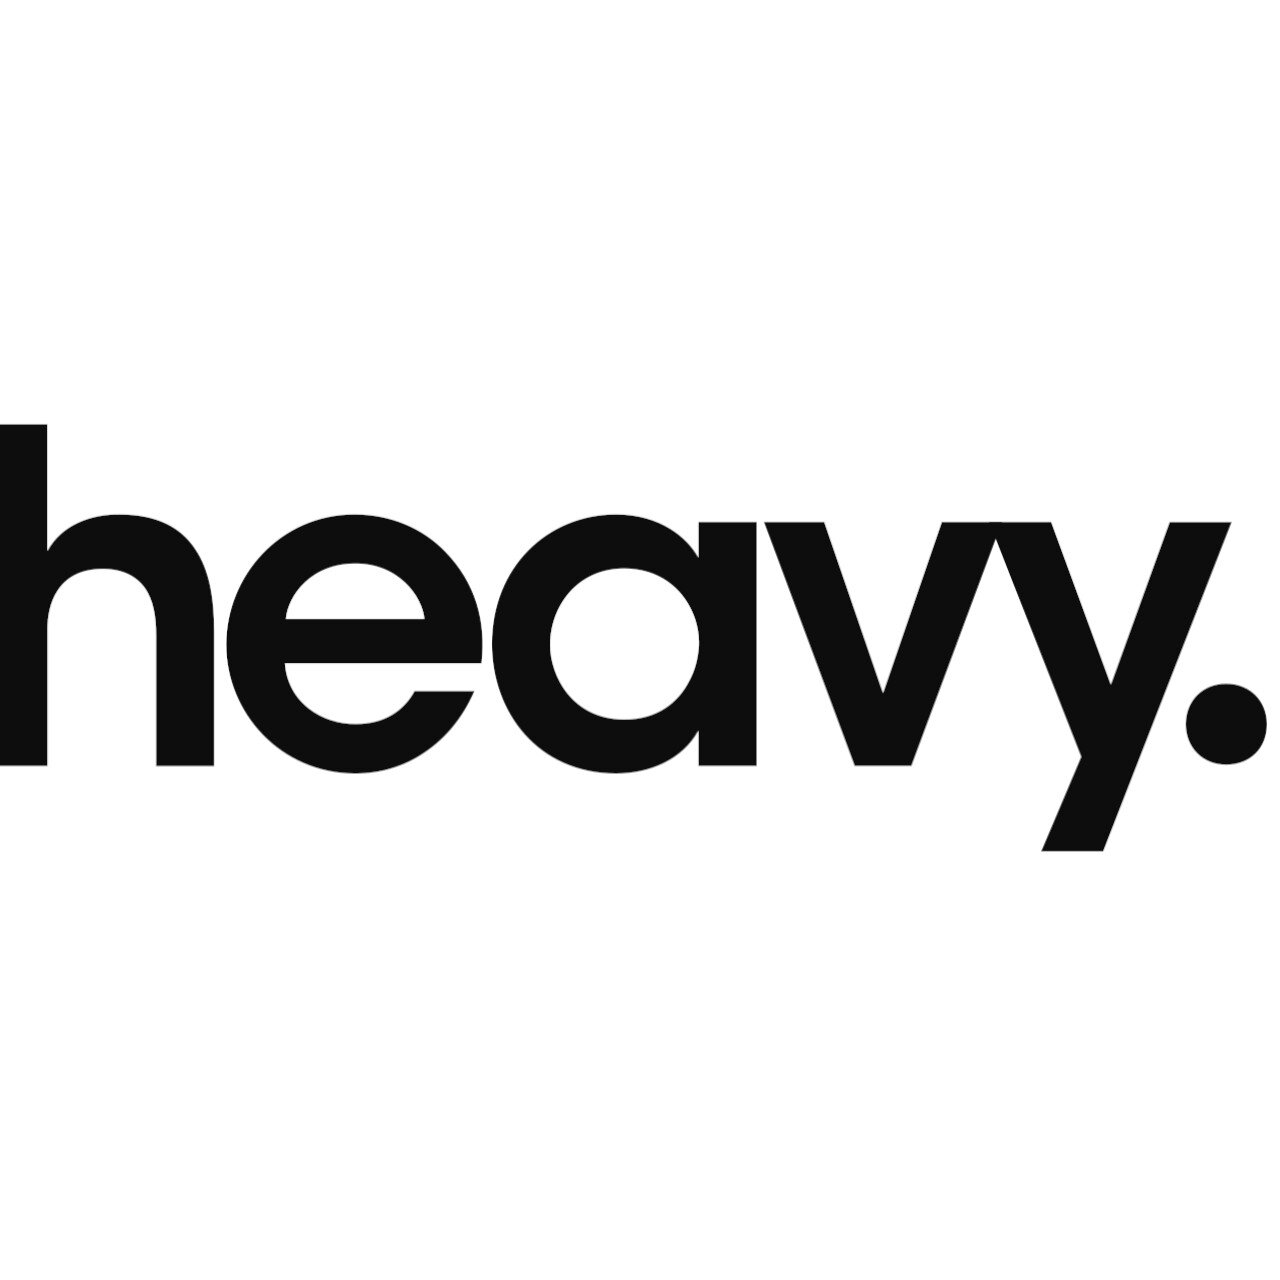 Heavy-logo.jpg